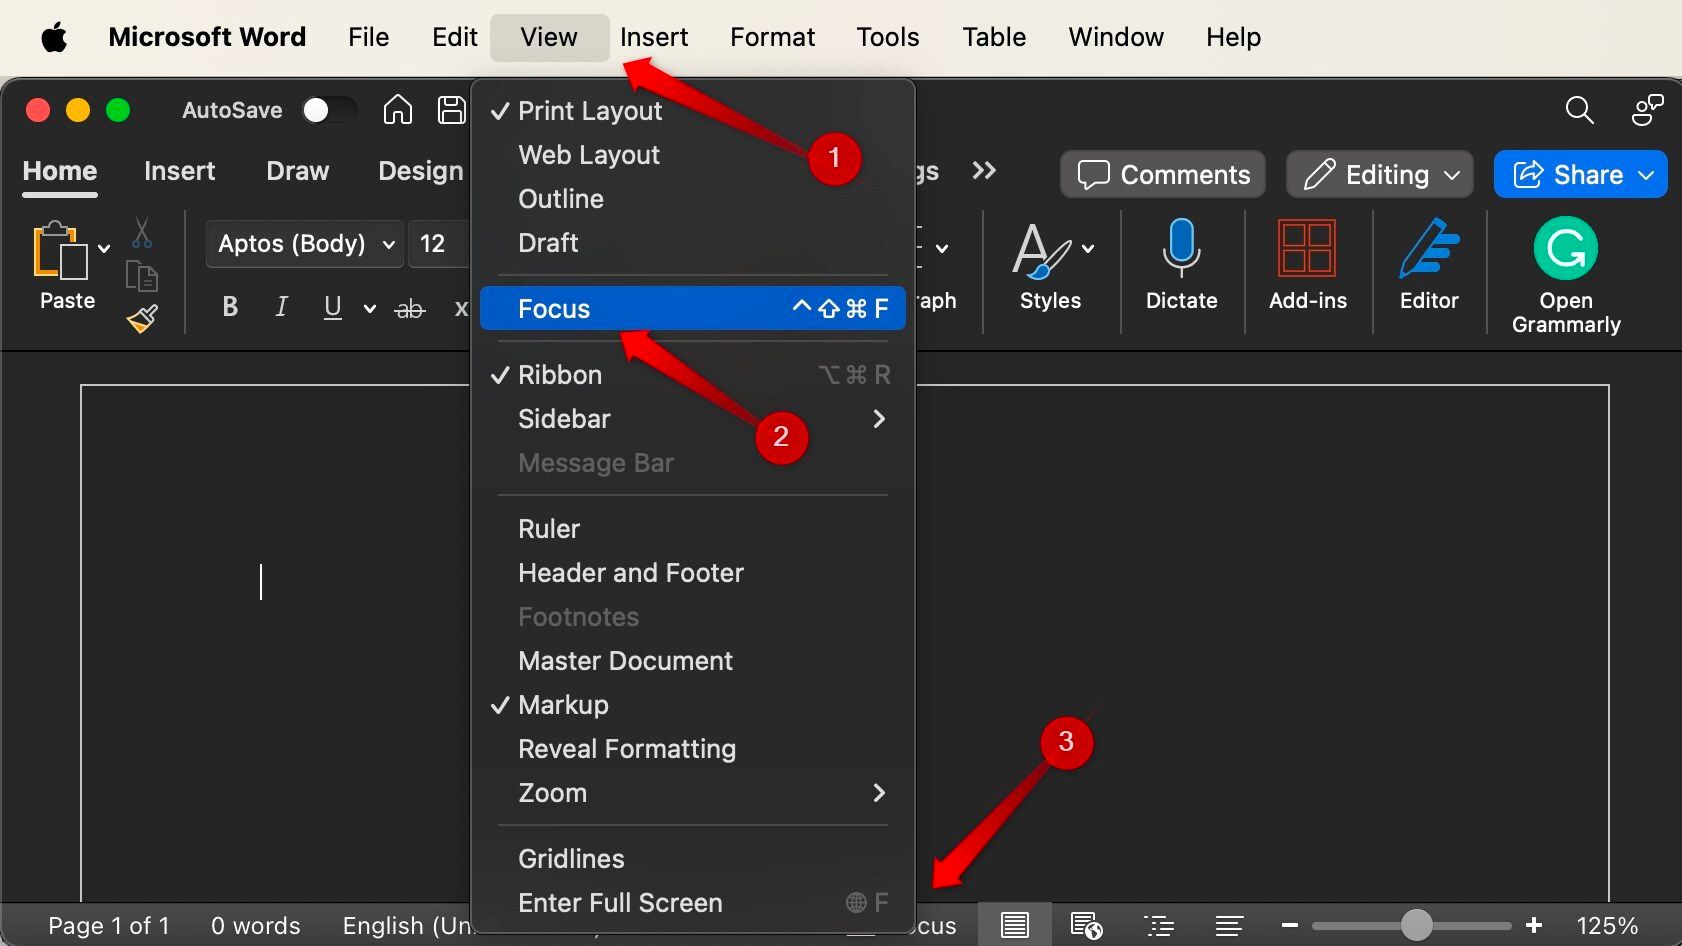 Enabling the Focus mode in Microsoft Word